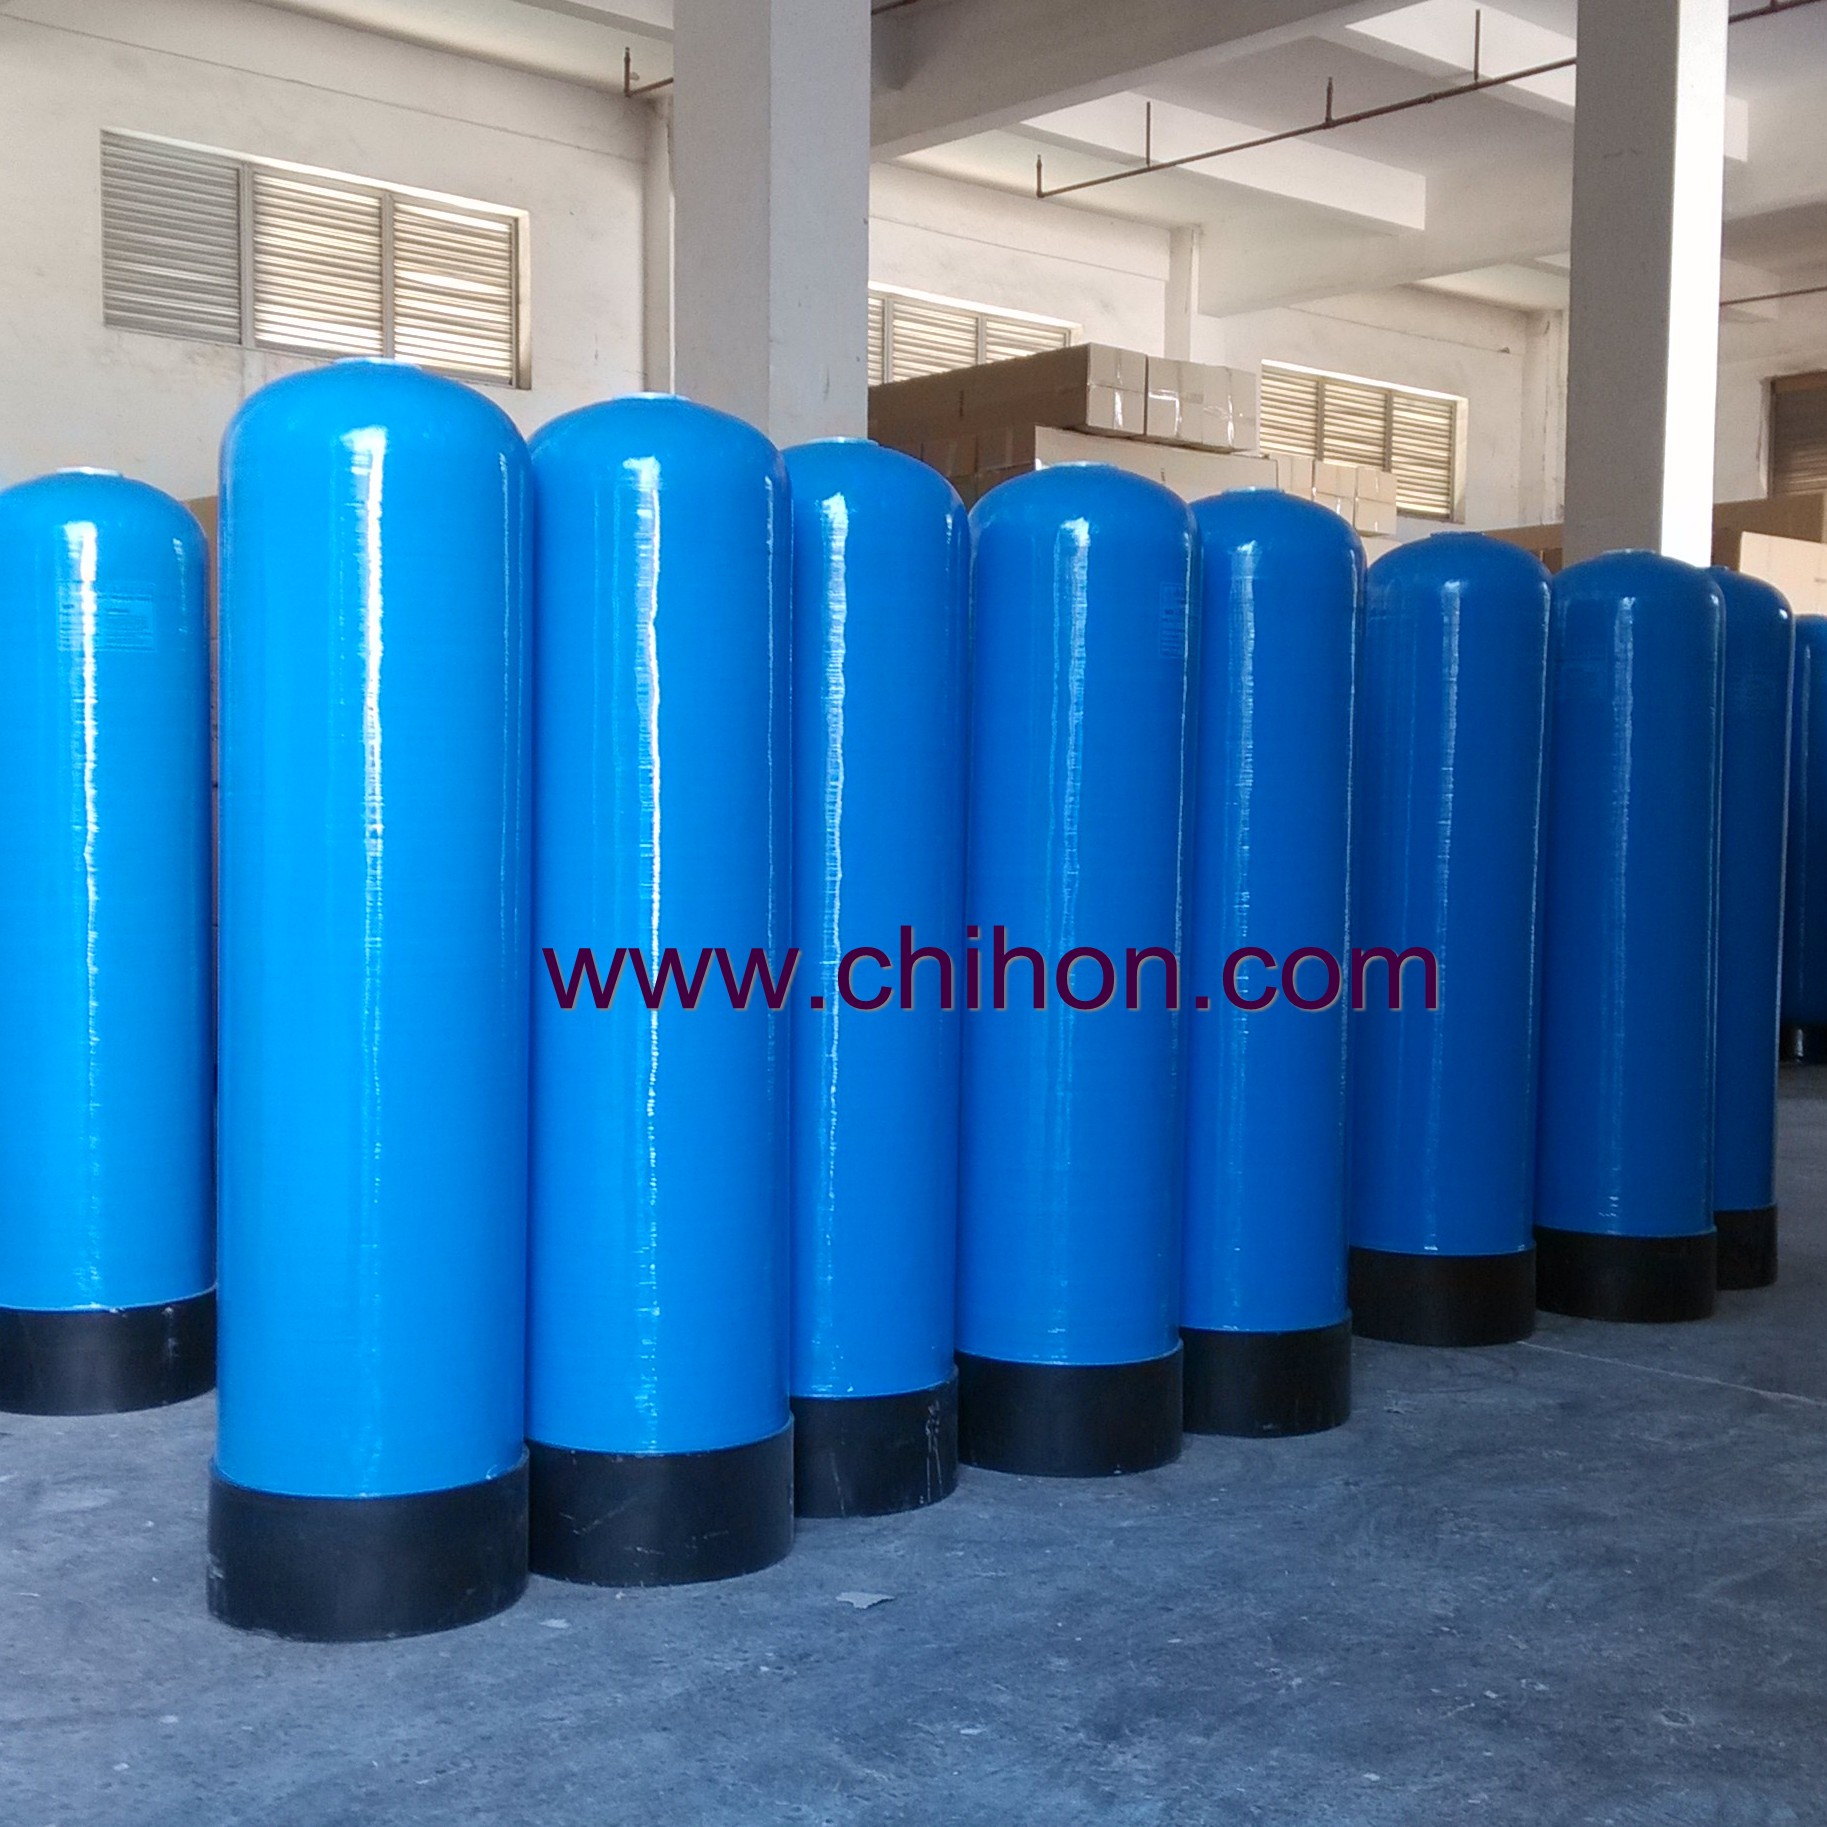 1354 frp pressure tank for water softener, filter treatment equipment